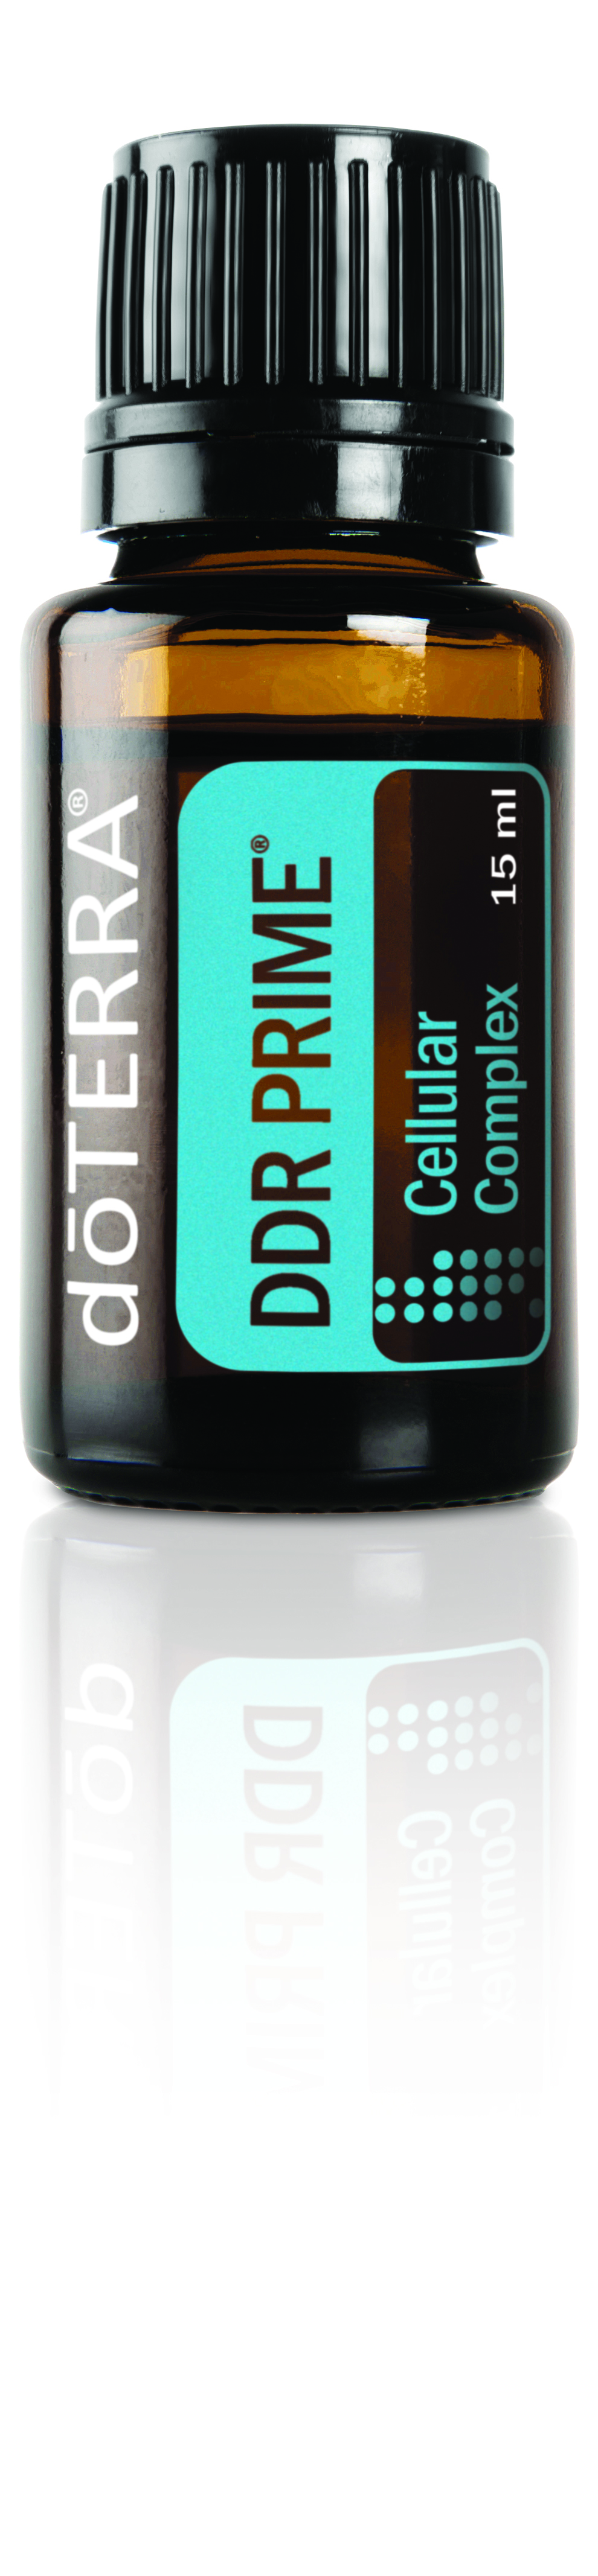 DDR Prime Oil | dōTERRA Essential Oils